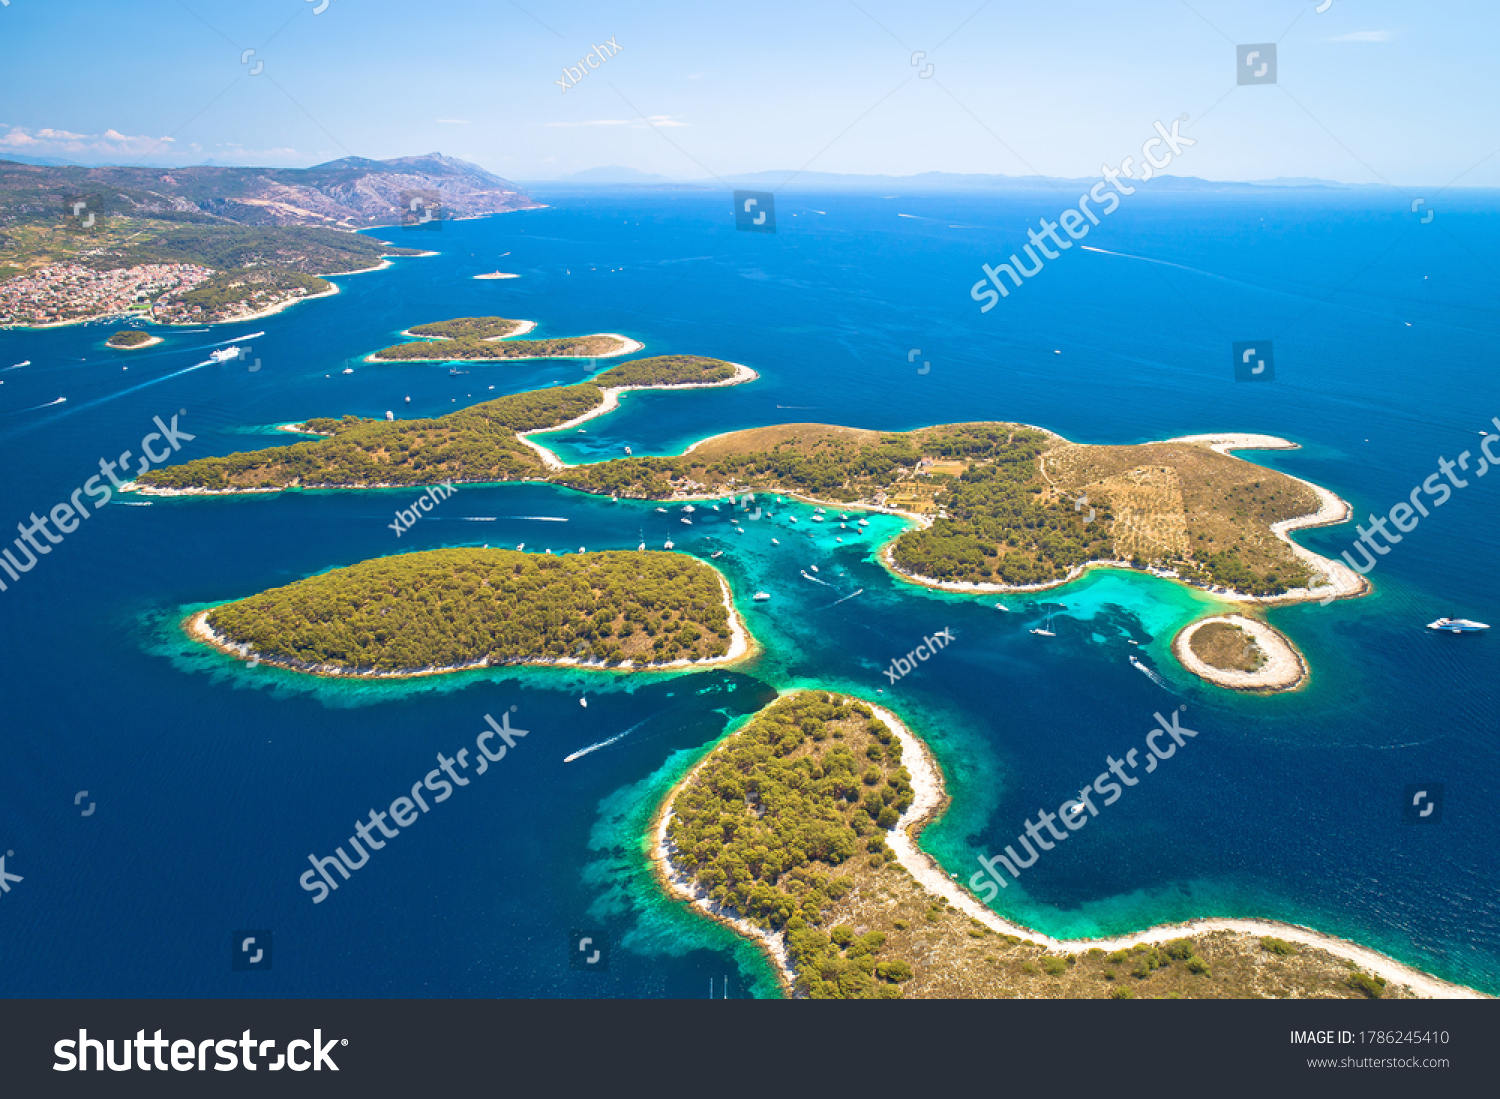 Pakleni otoci yachting destination arcipelago aerial view, Hvar island, Dalmatia region of Croatia #1786245410